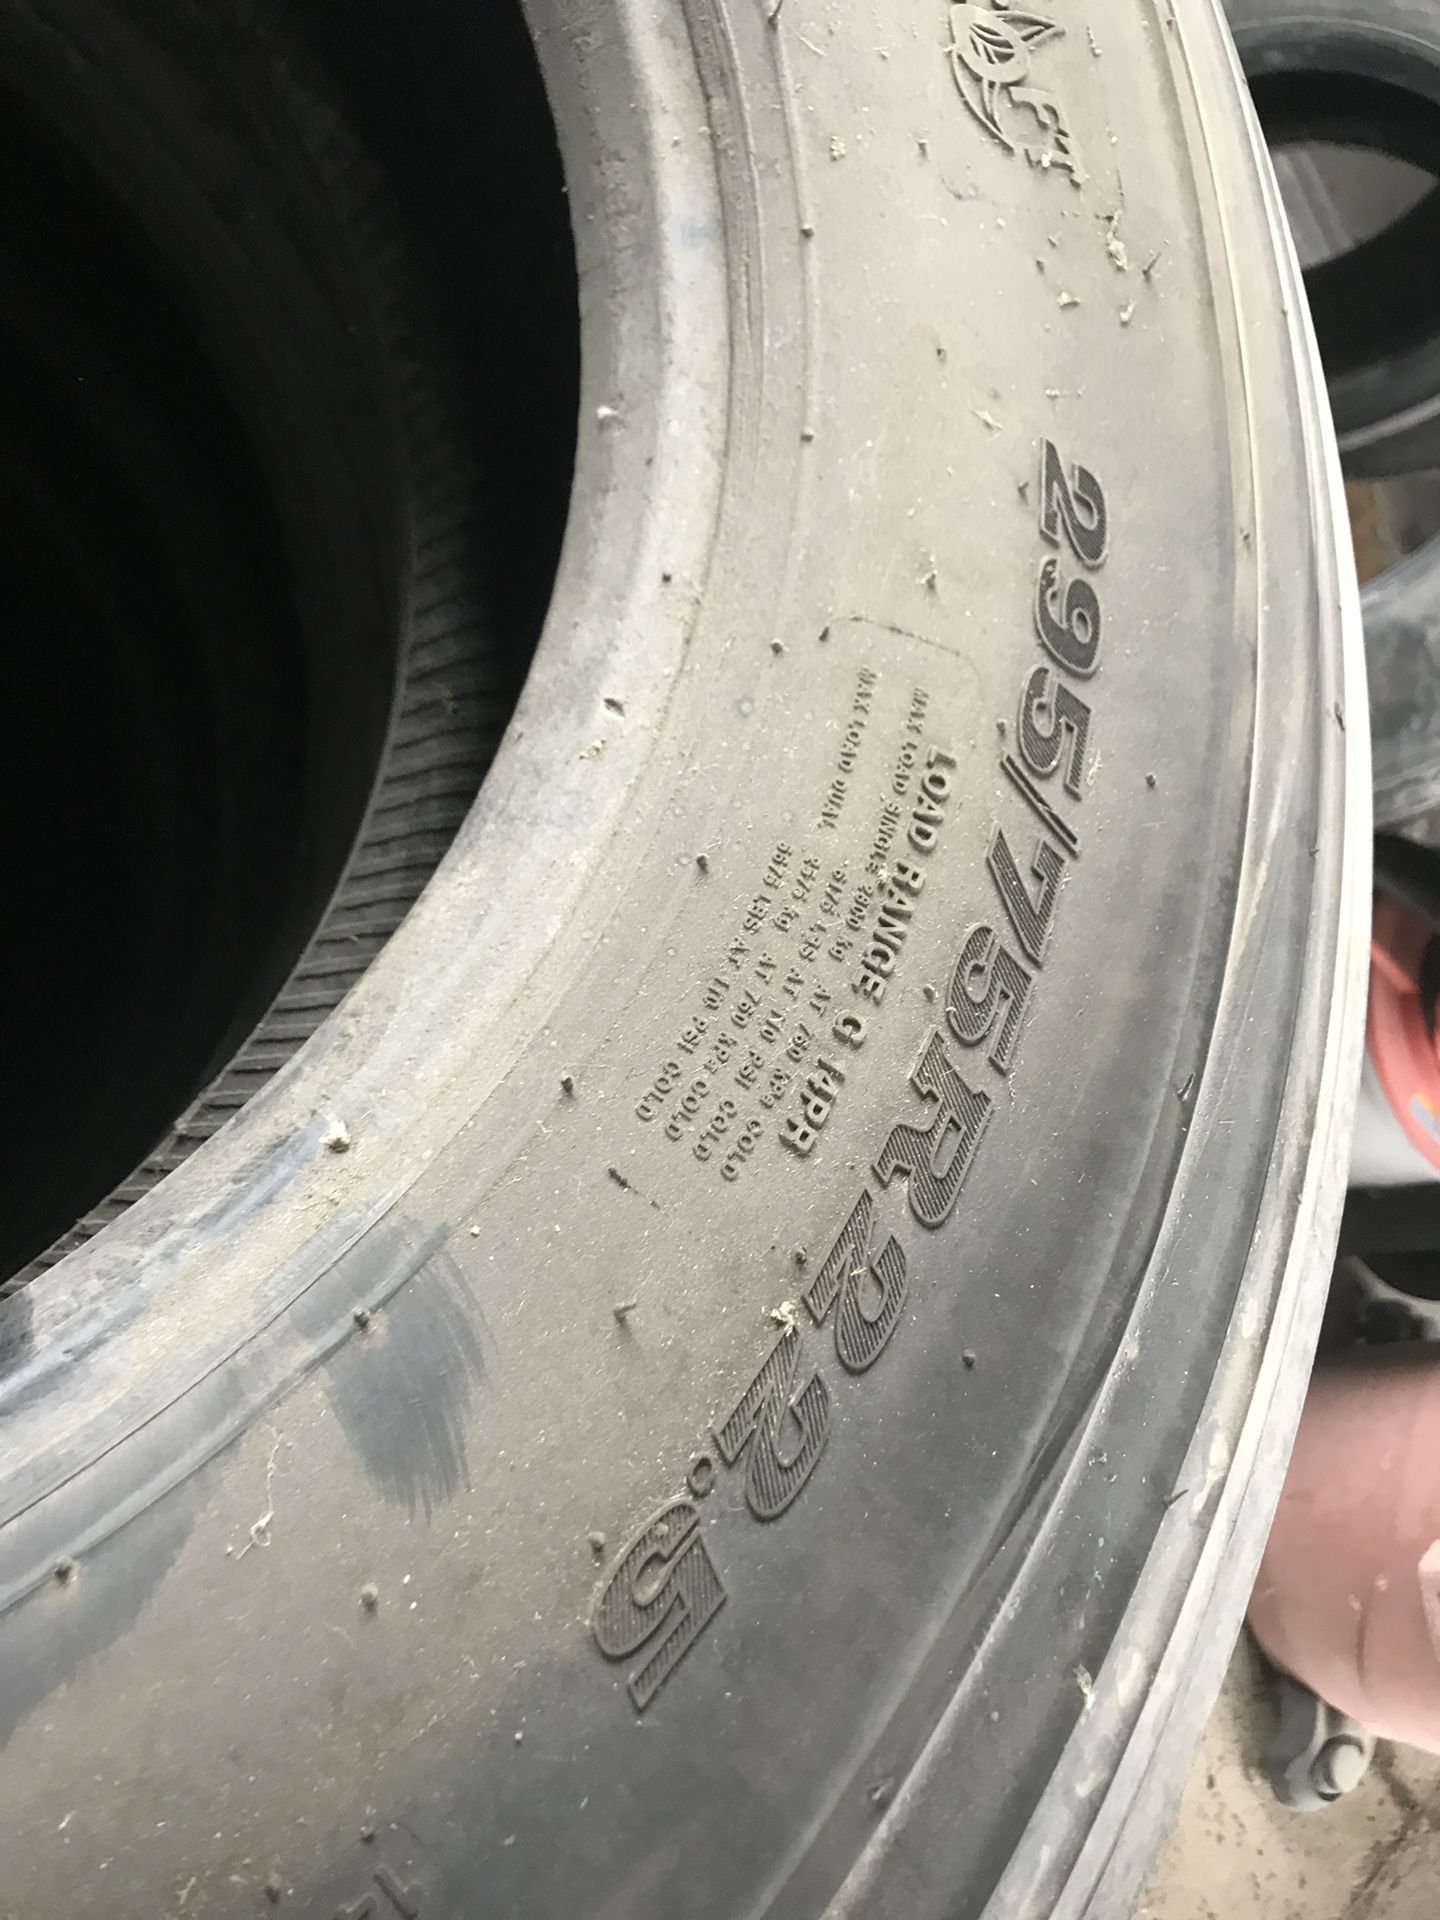 Used semi tires